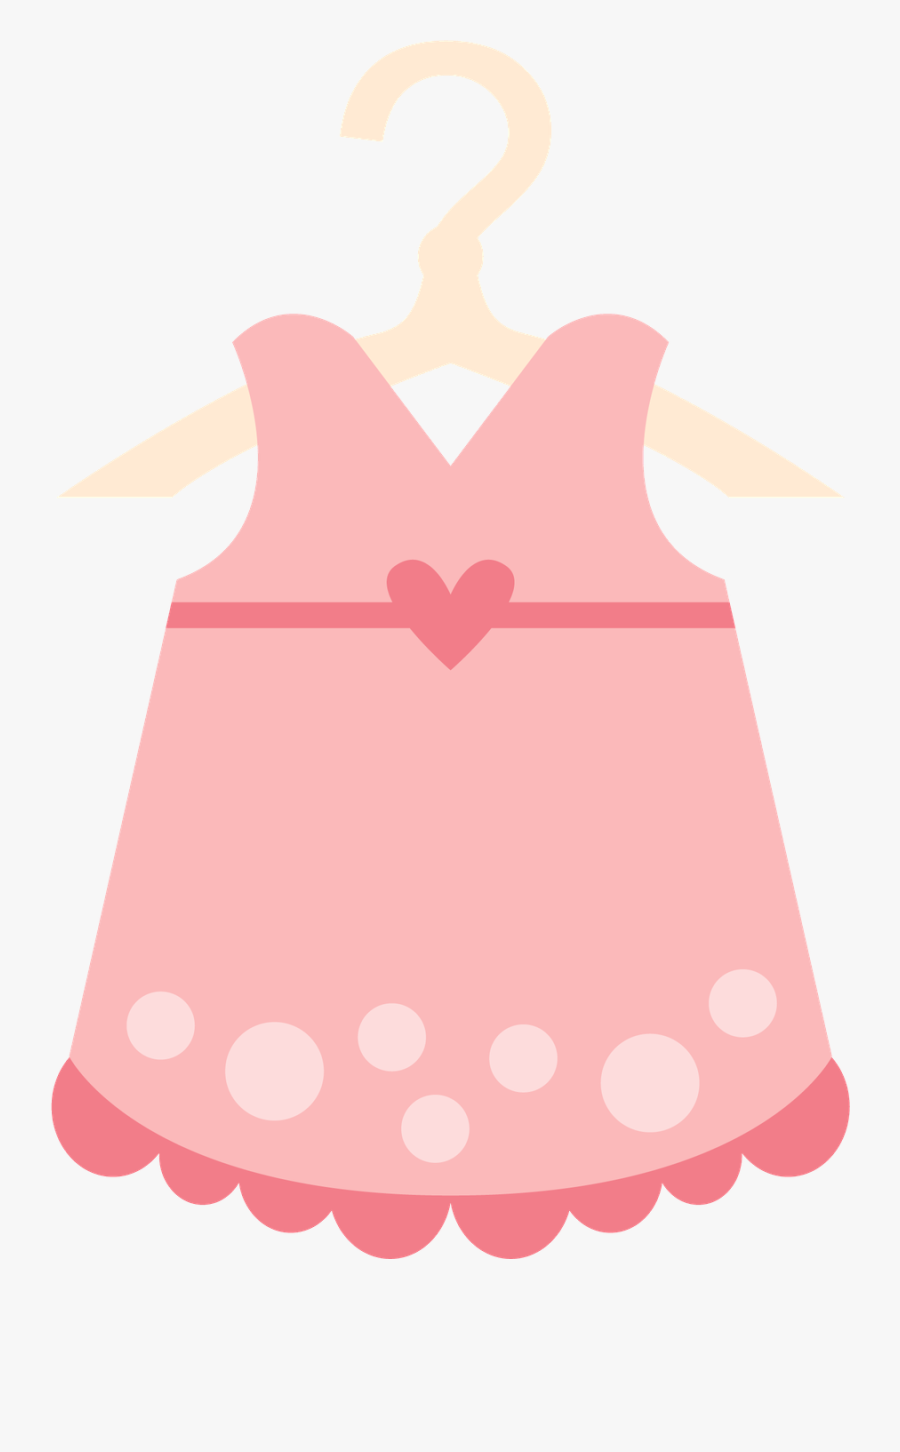 Baby Clothes Clipart Png, Transparent Clipart